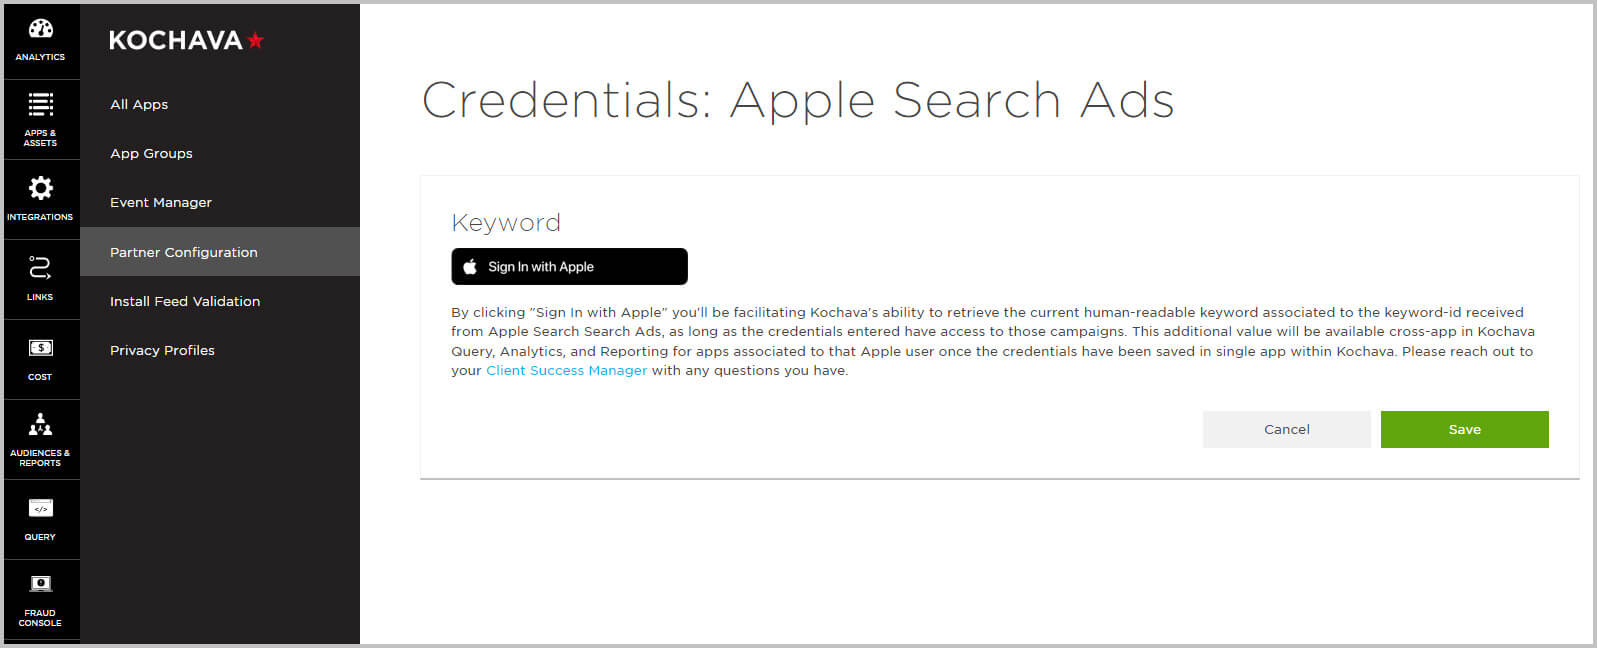 Apple Search Ads Credentials Kochava dashboard